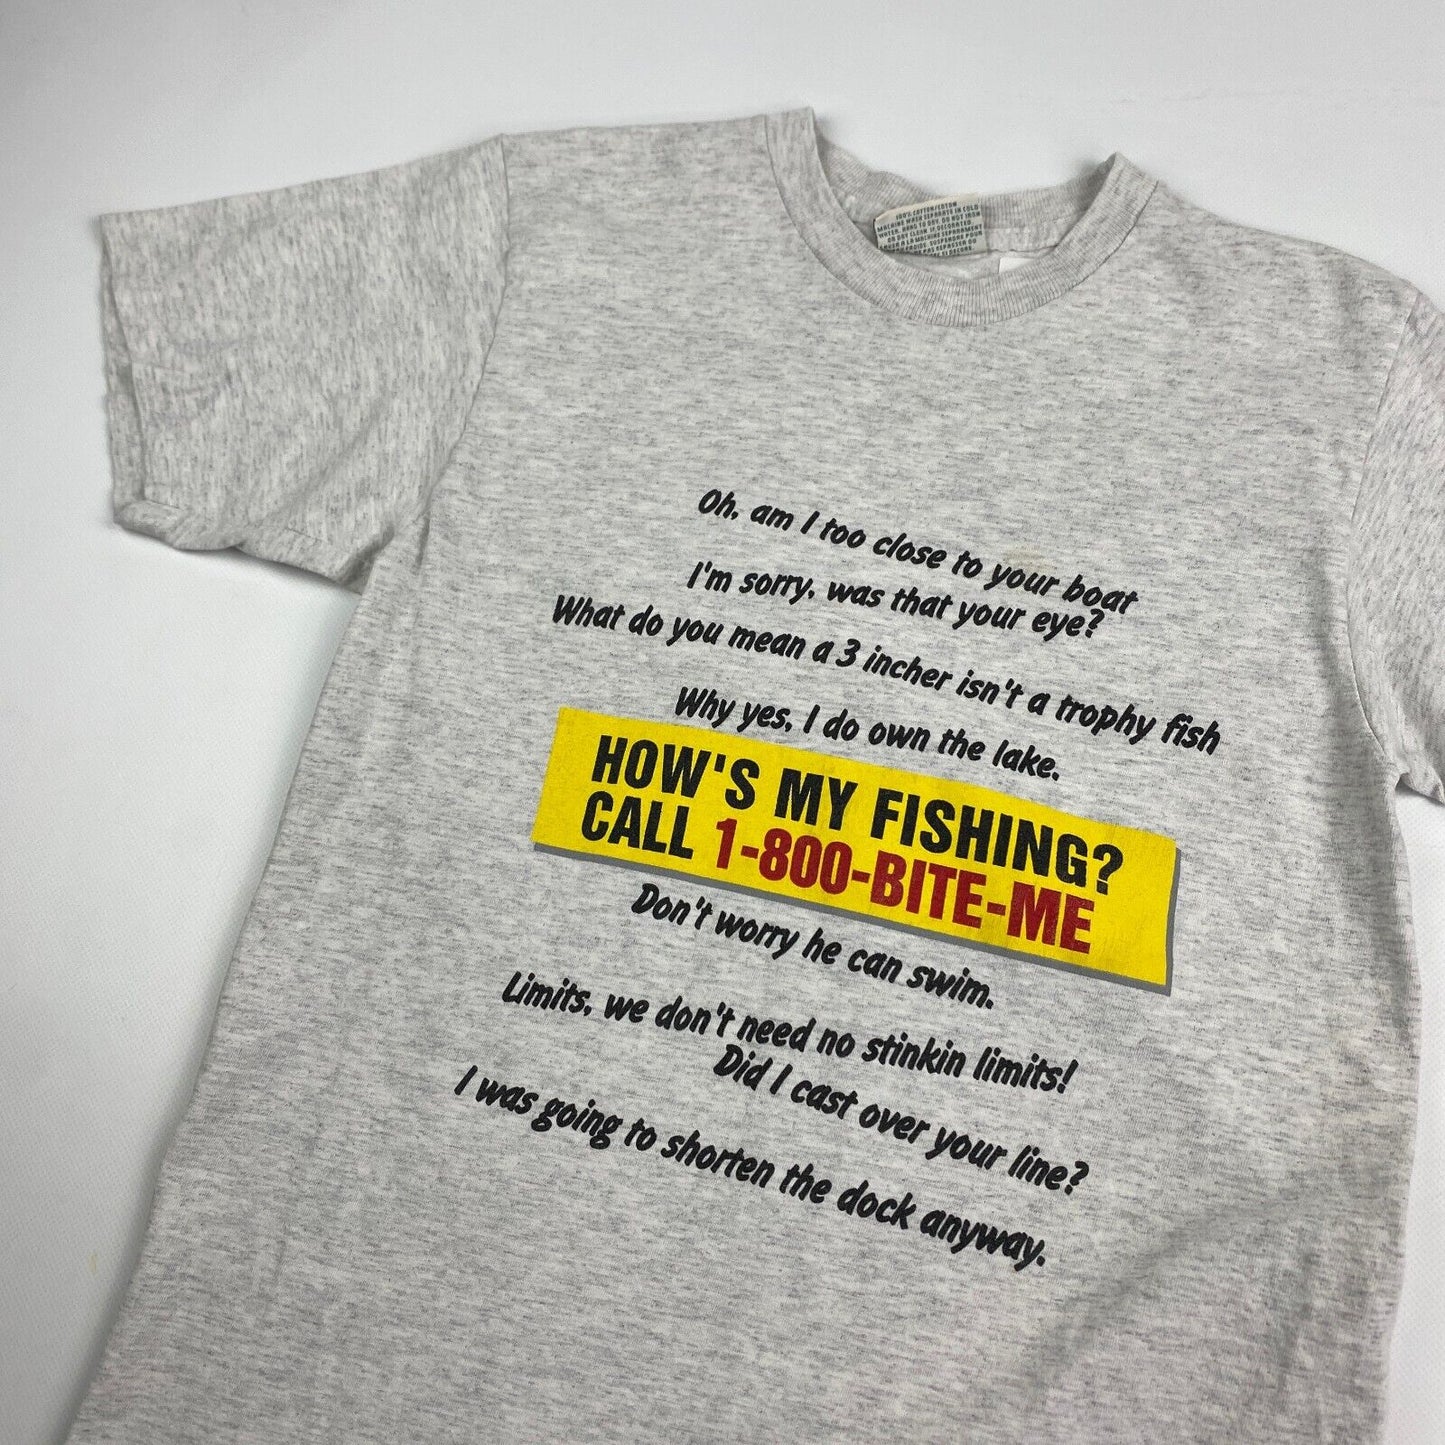 VINTAGE 90s Hows My Fishing Call 1-800 Bite Me T-Shirt sz Small Men